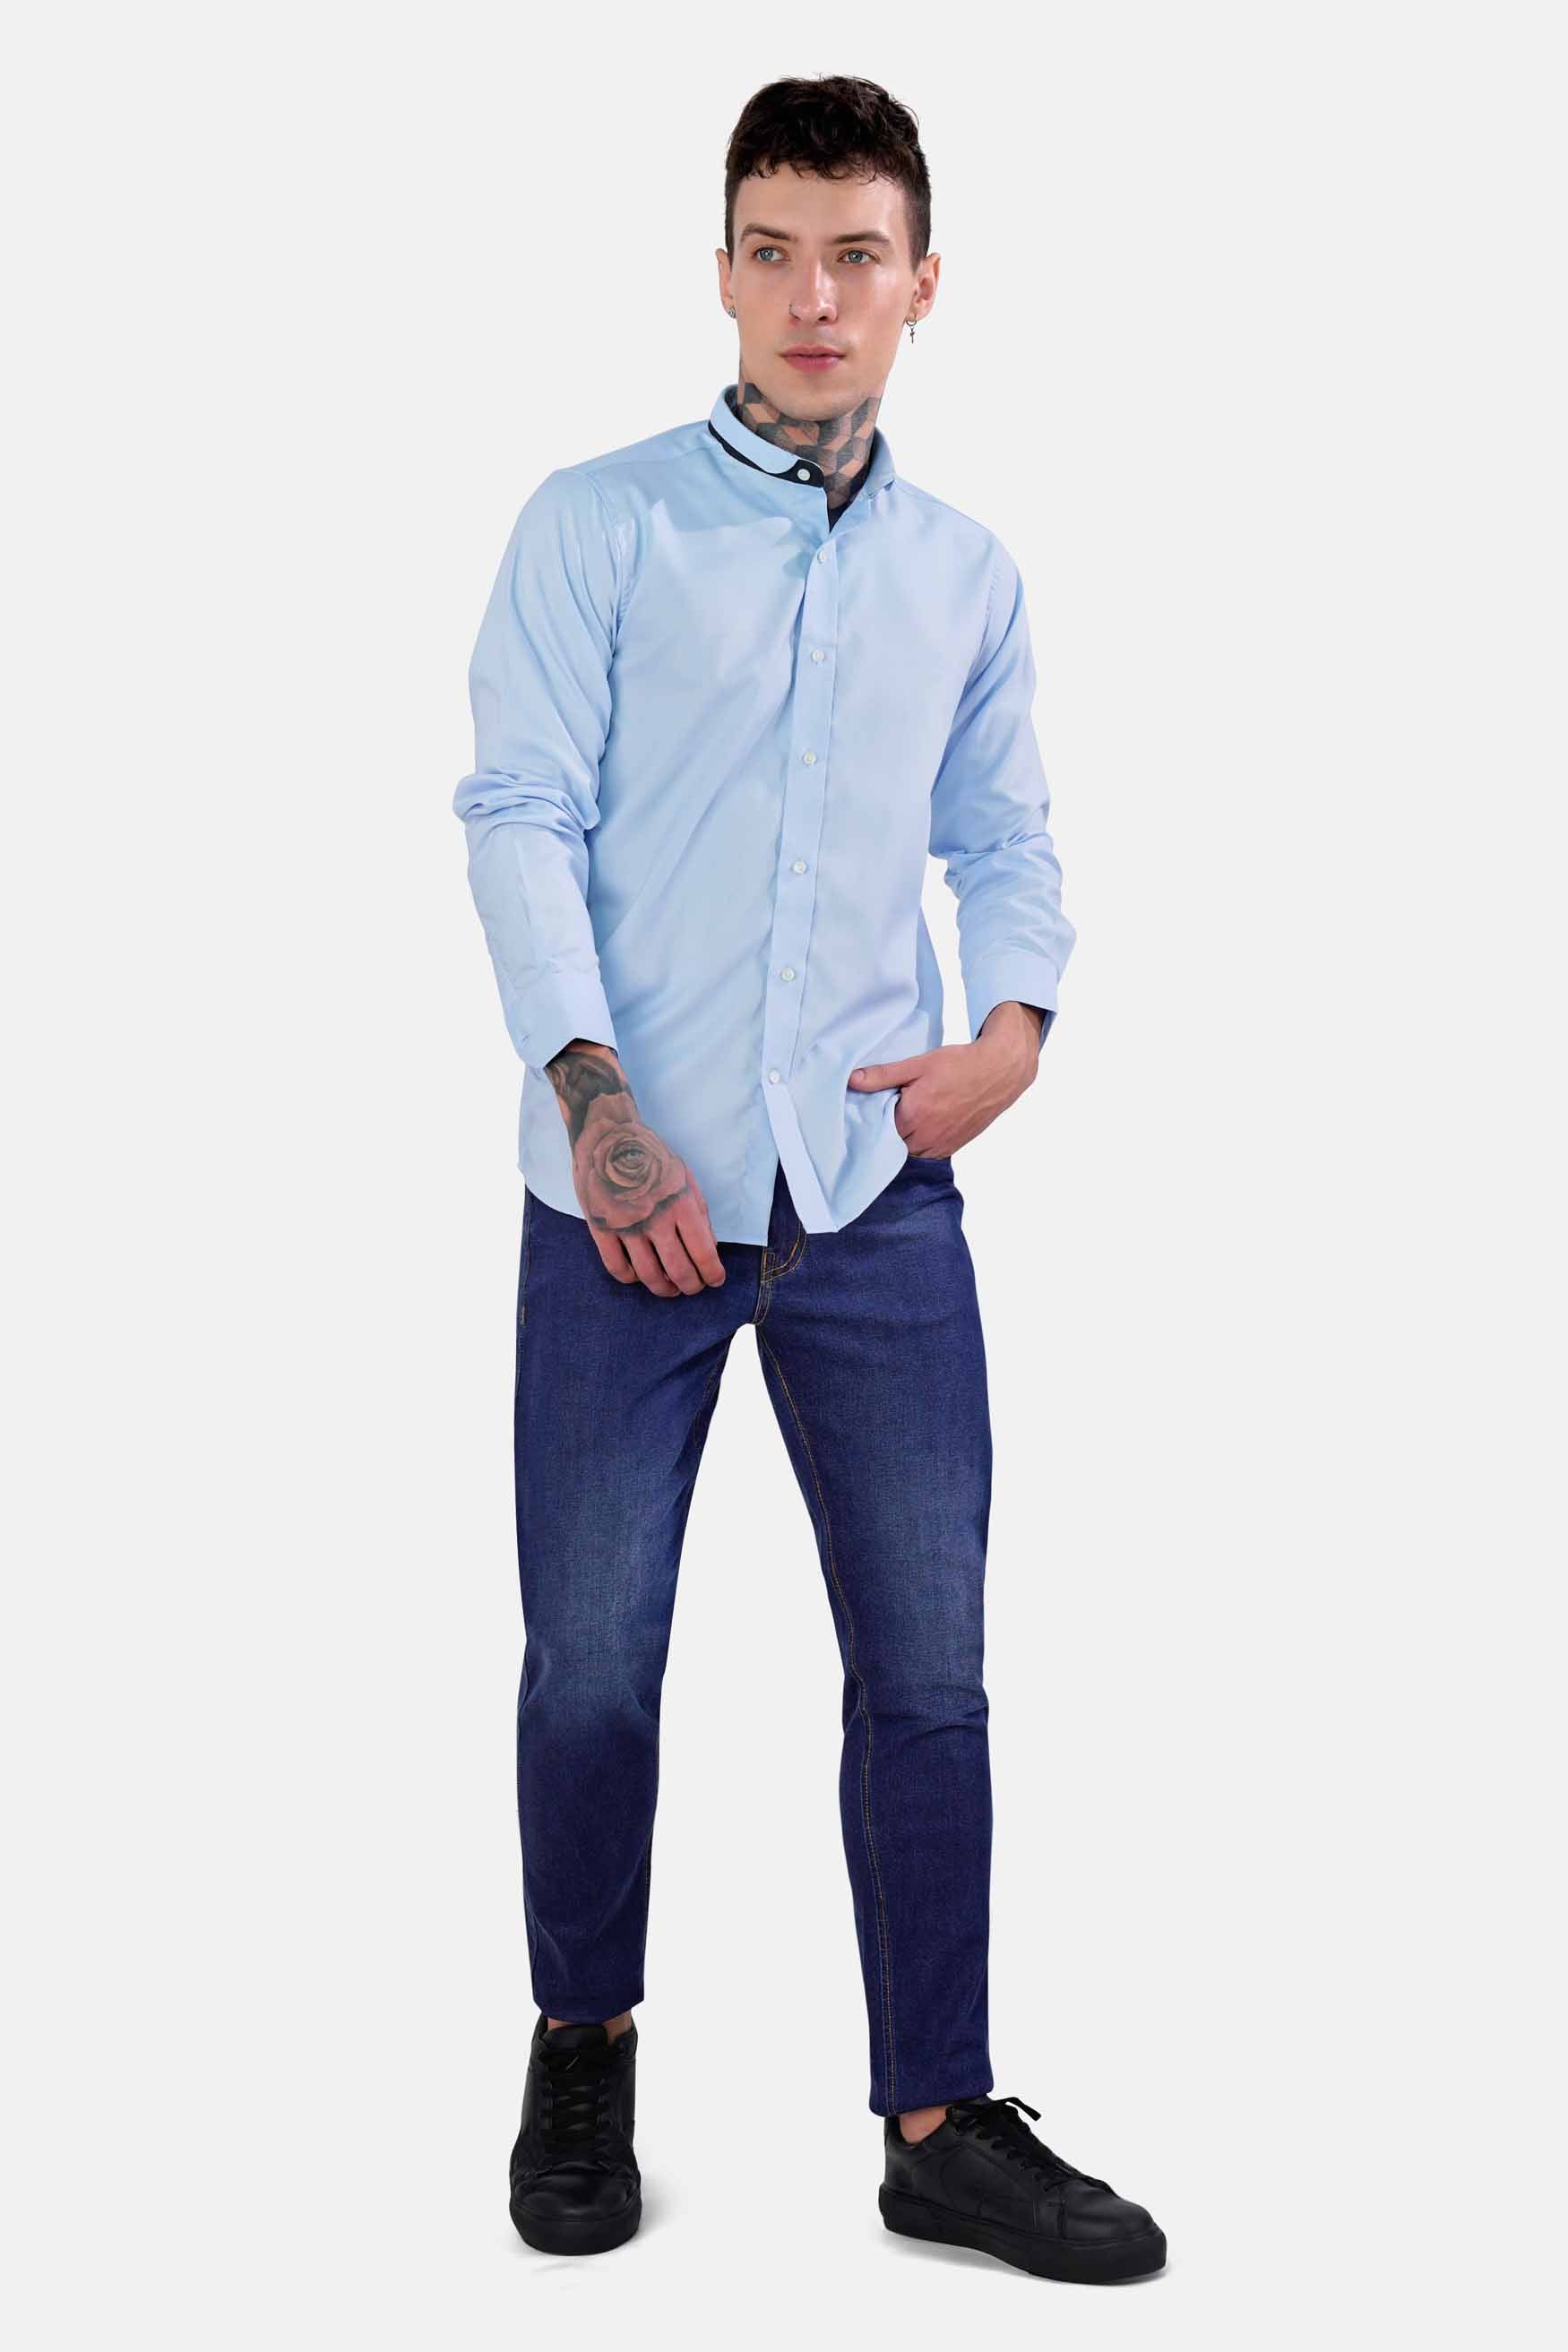 Glacier Blue Twill Premium Cotton Shirt